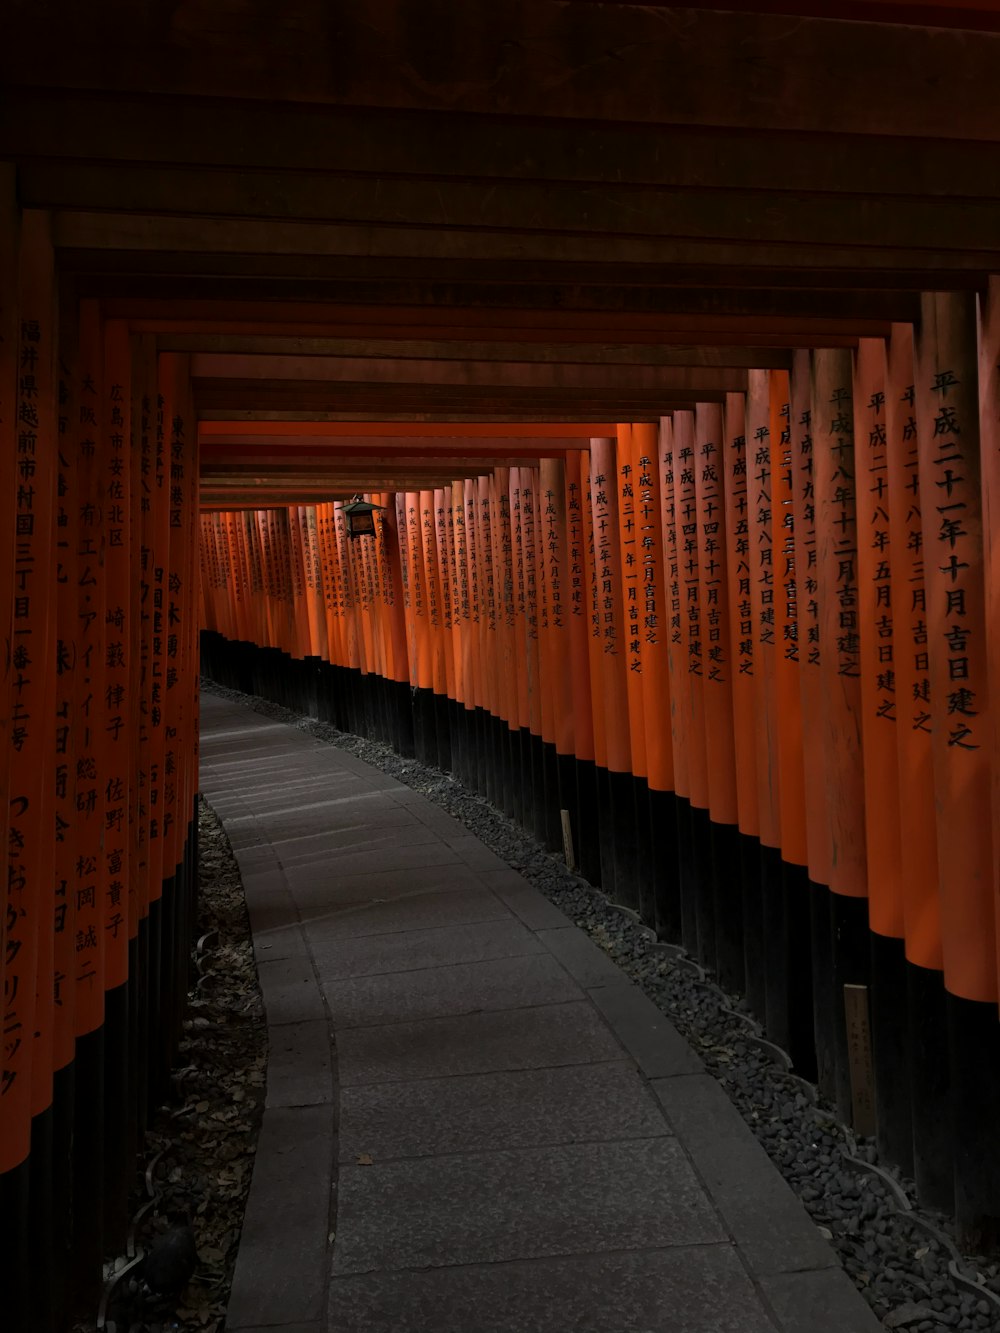 orange and black wooden posts